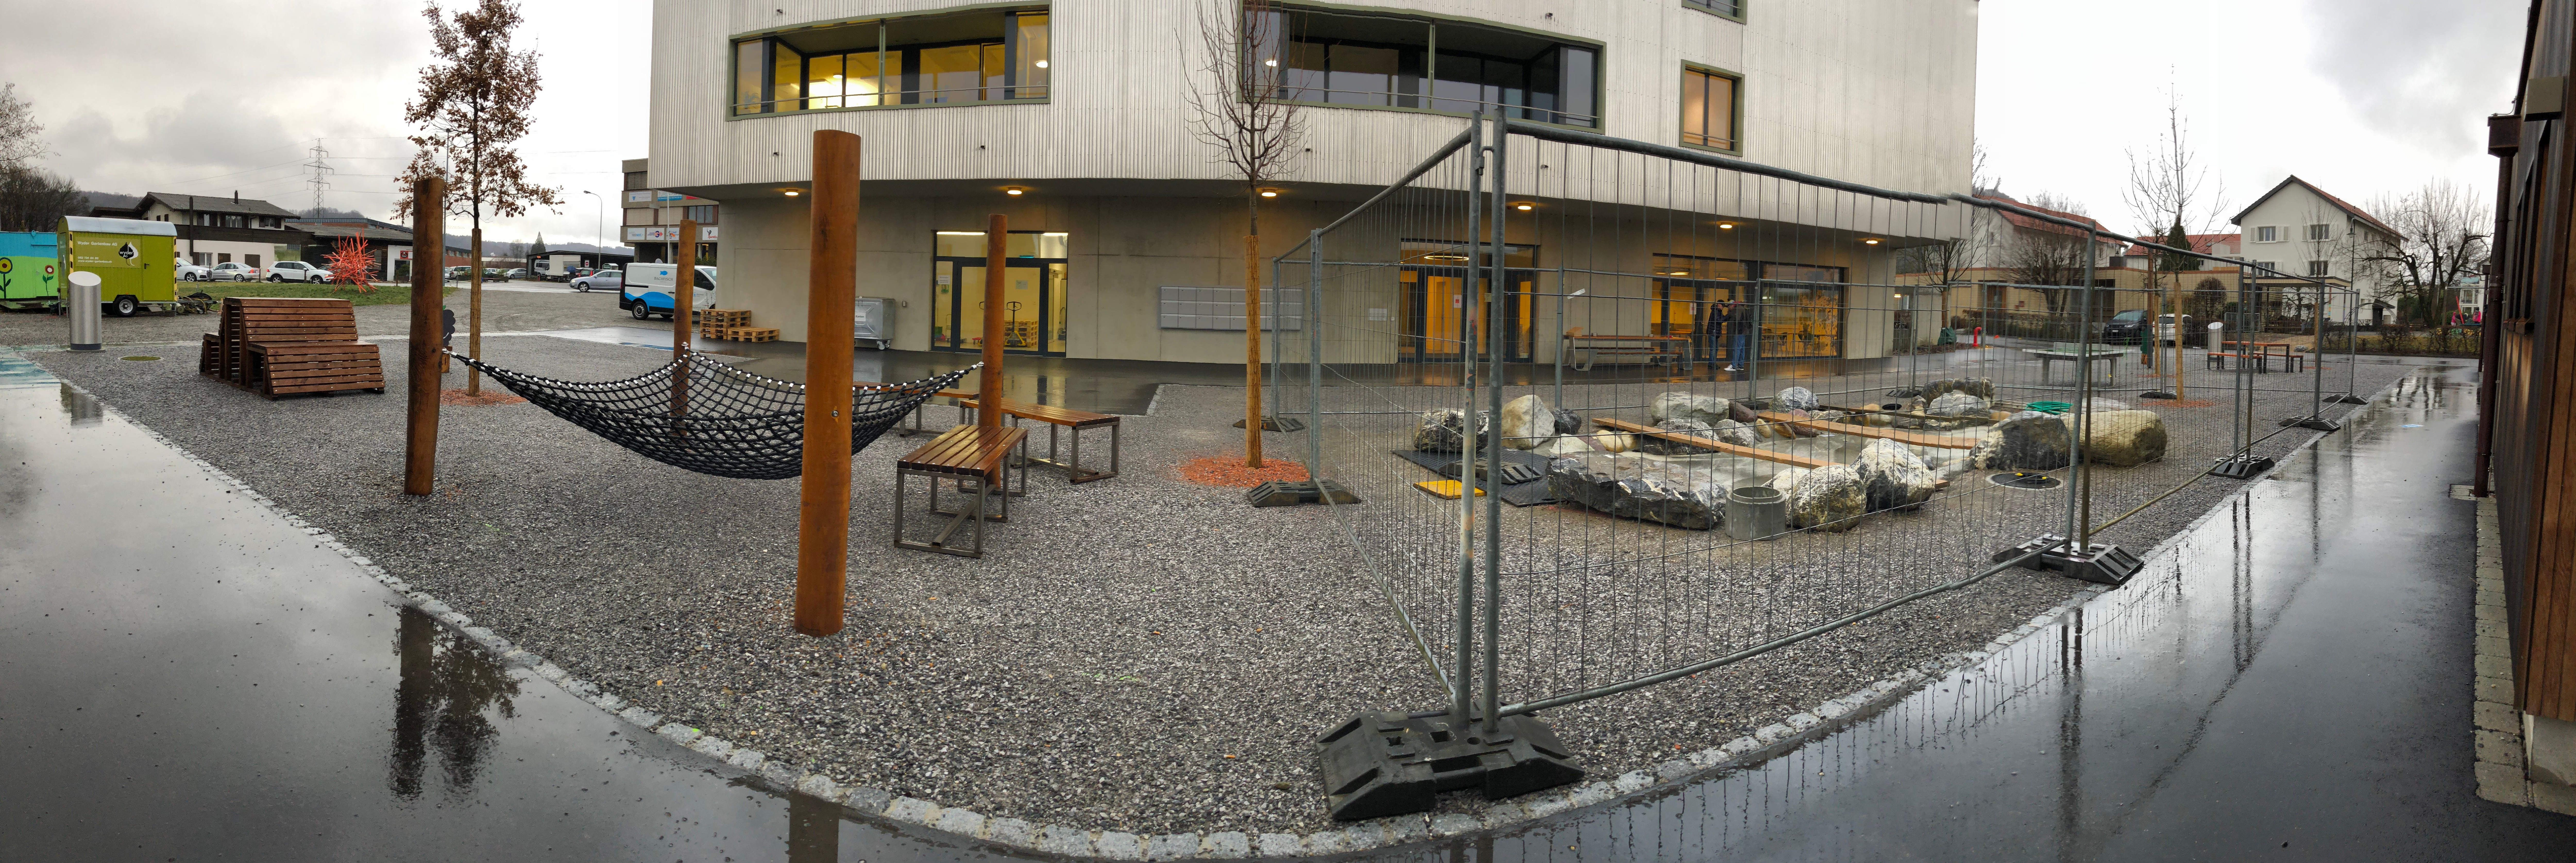 Stiftung Töpferhaus Quartierplatz